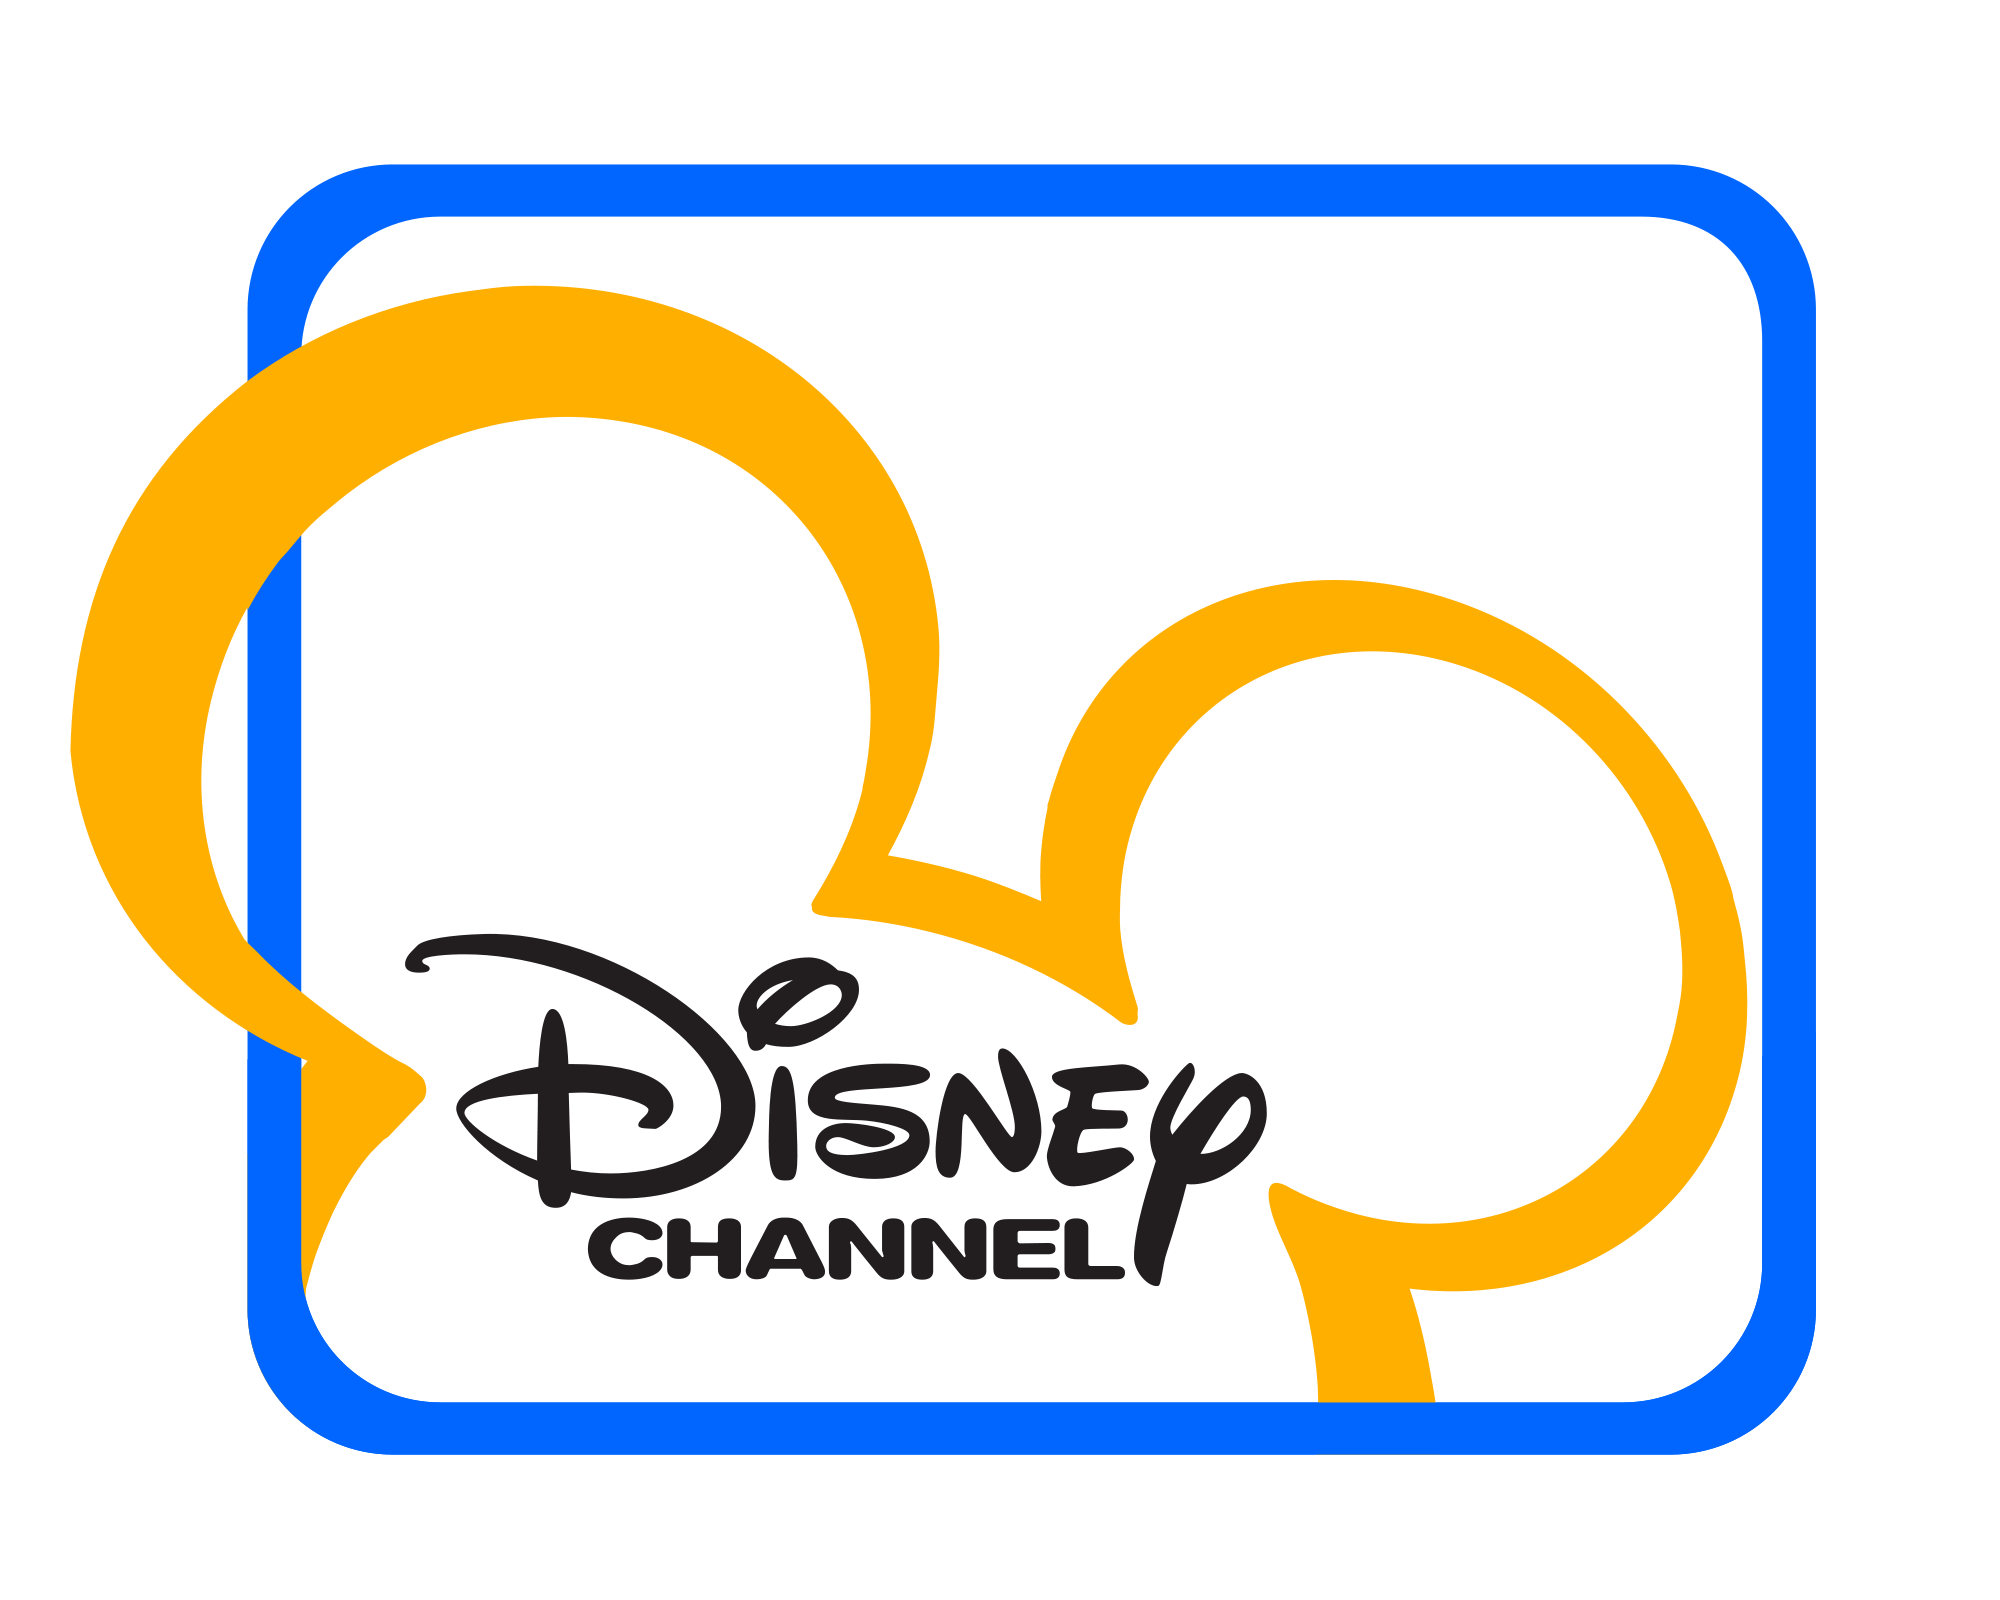 Канал дисней 1. Канал Disney. Телеканал Дисней. Логотип Disney channel. Канал Disney (Россия).